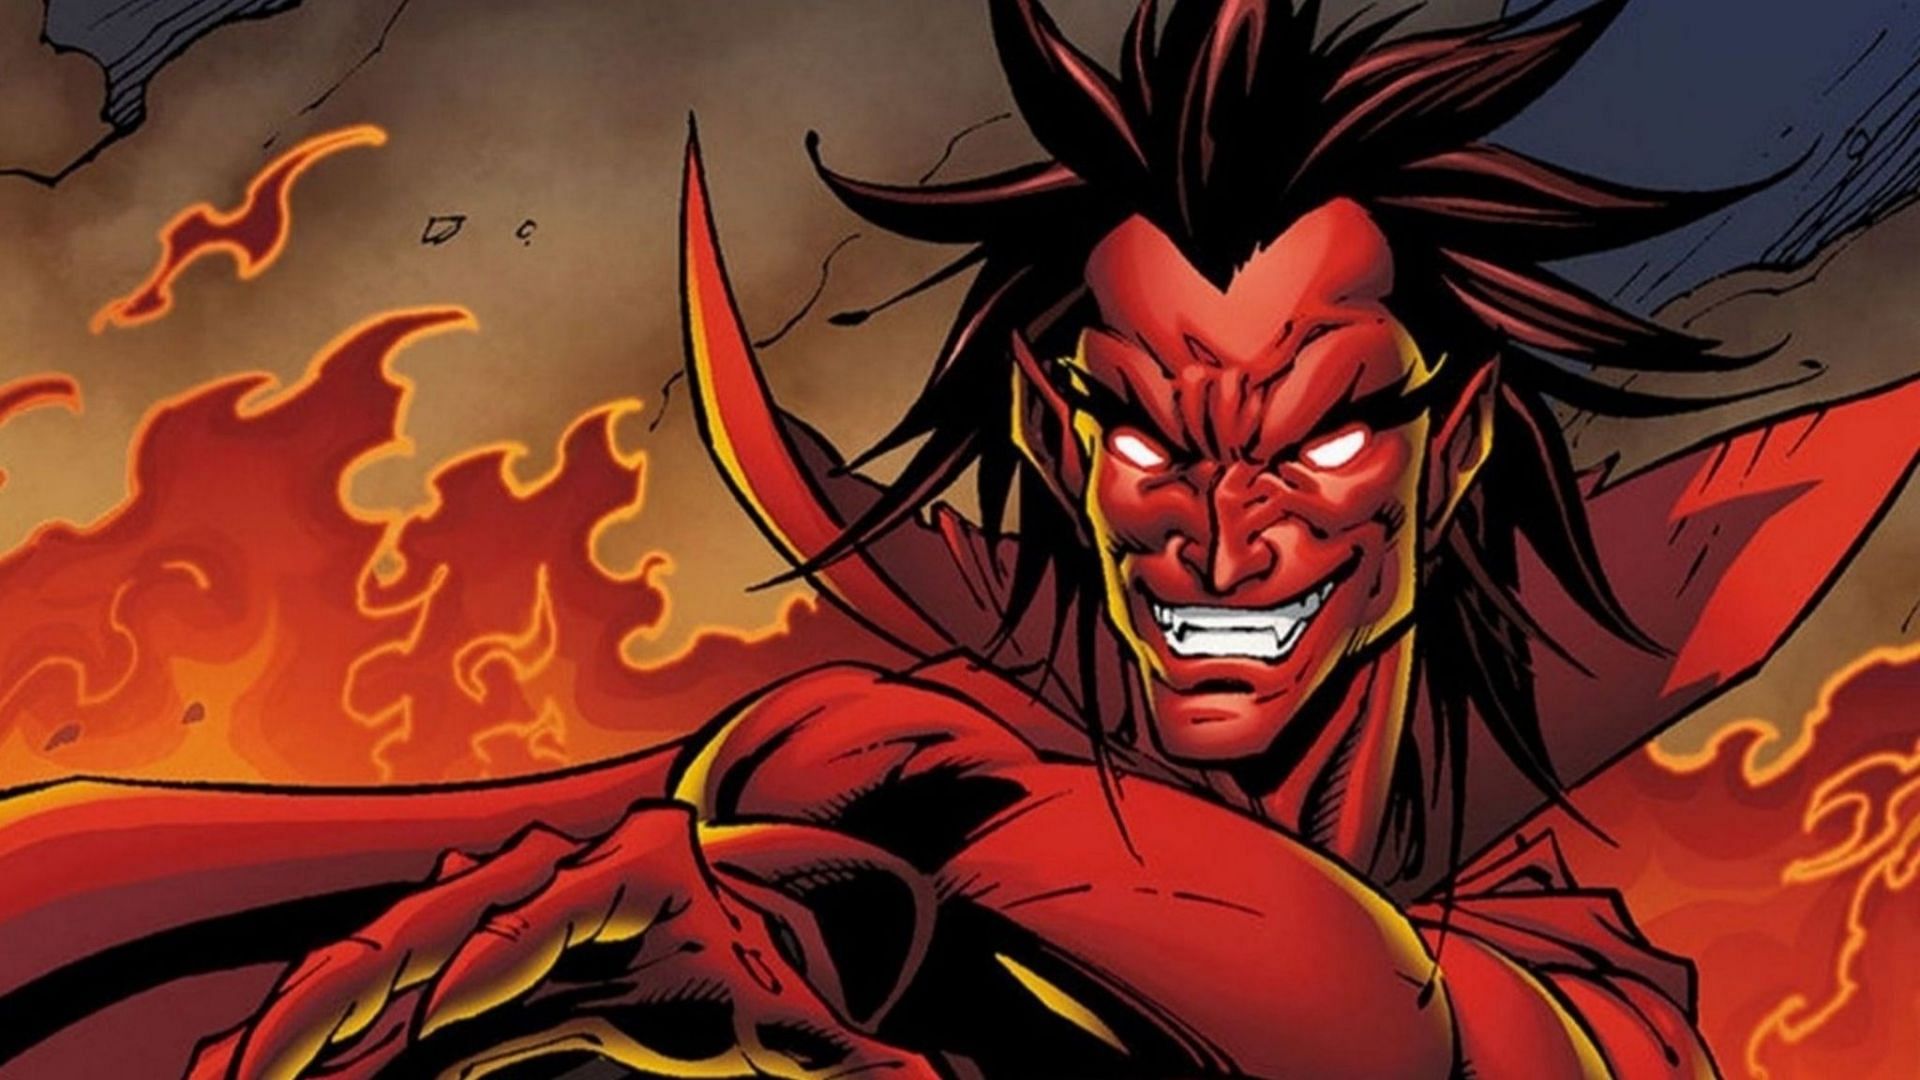 Mephisto in the comic books (Image via Marvel Comics)